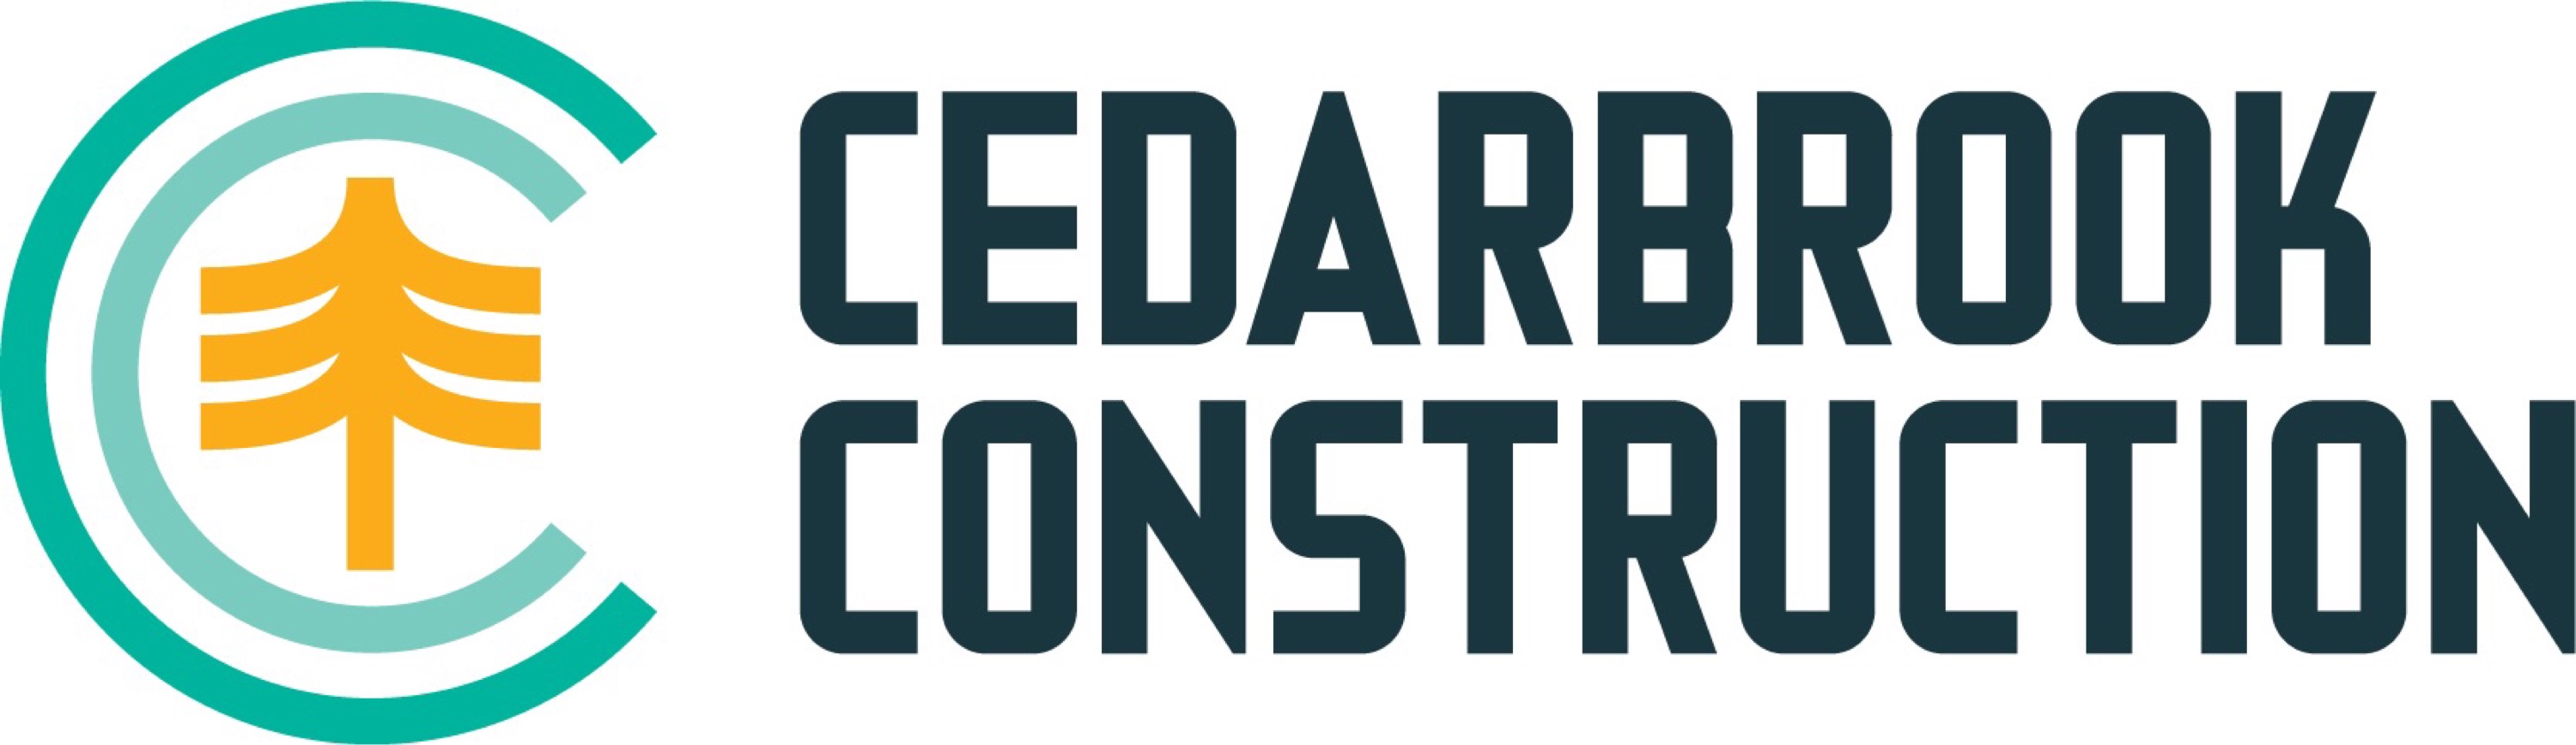 Cedarbrook Construction, LLC Logo